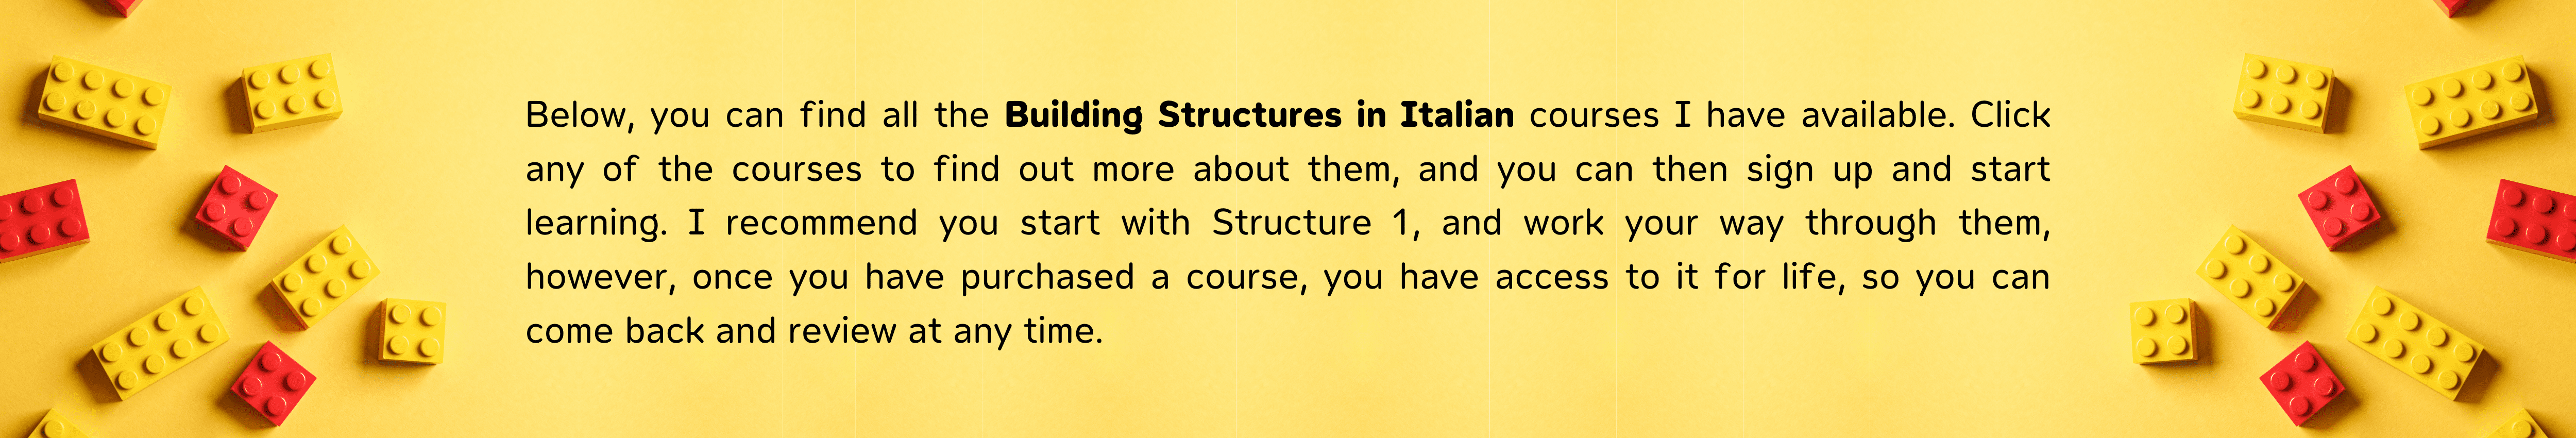 Building Structures in Italian